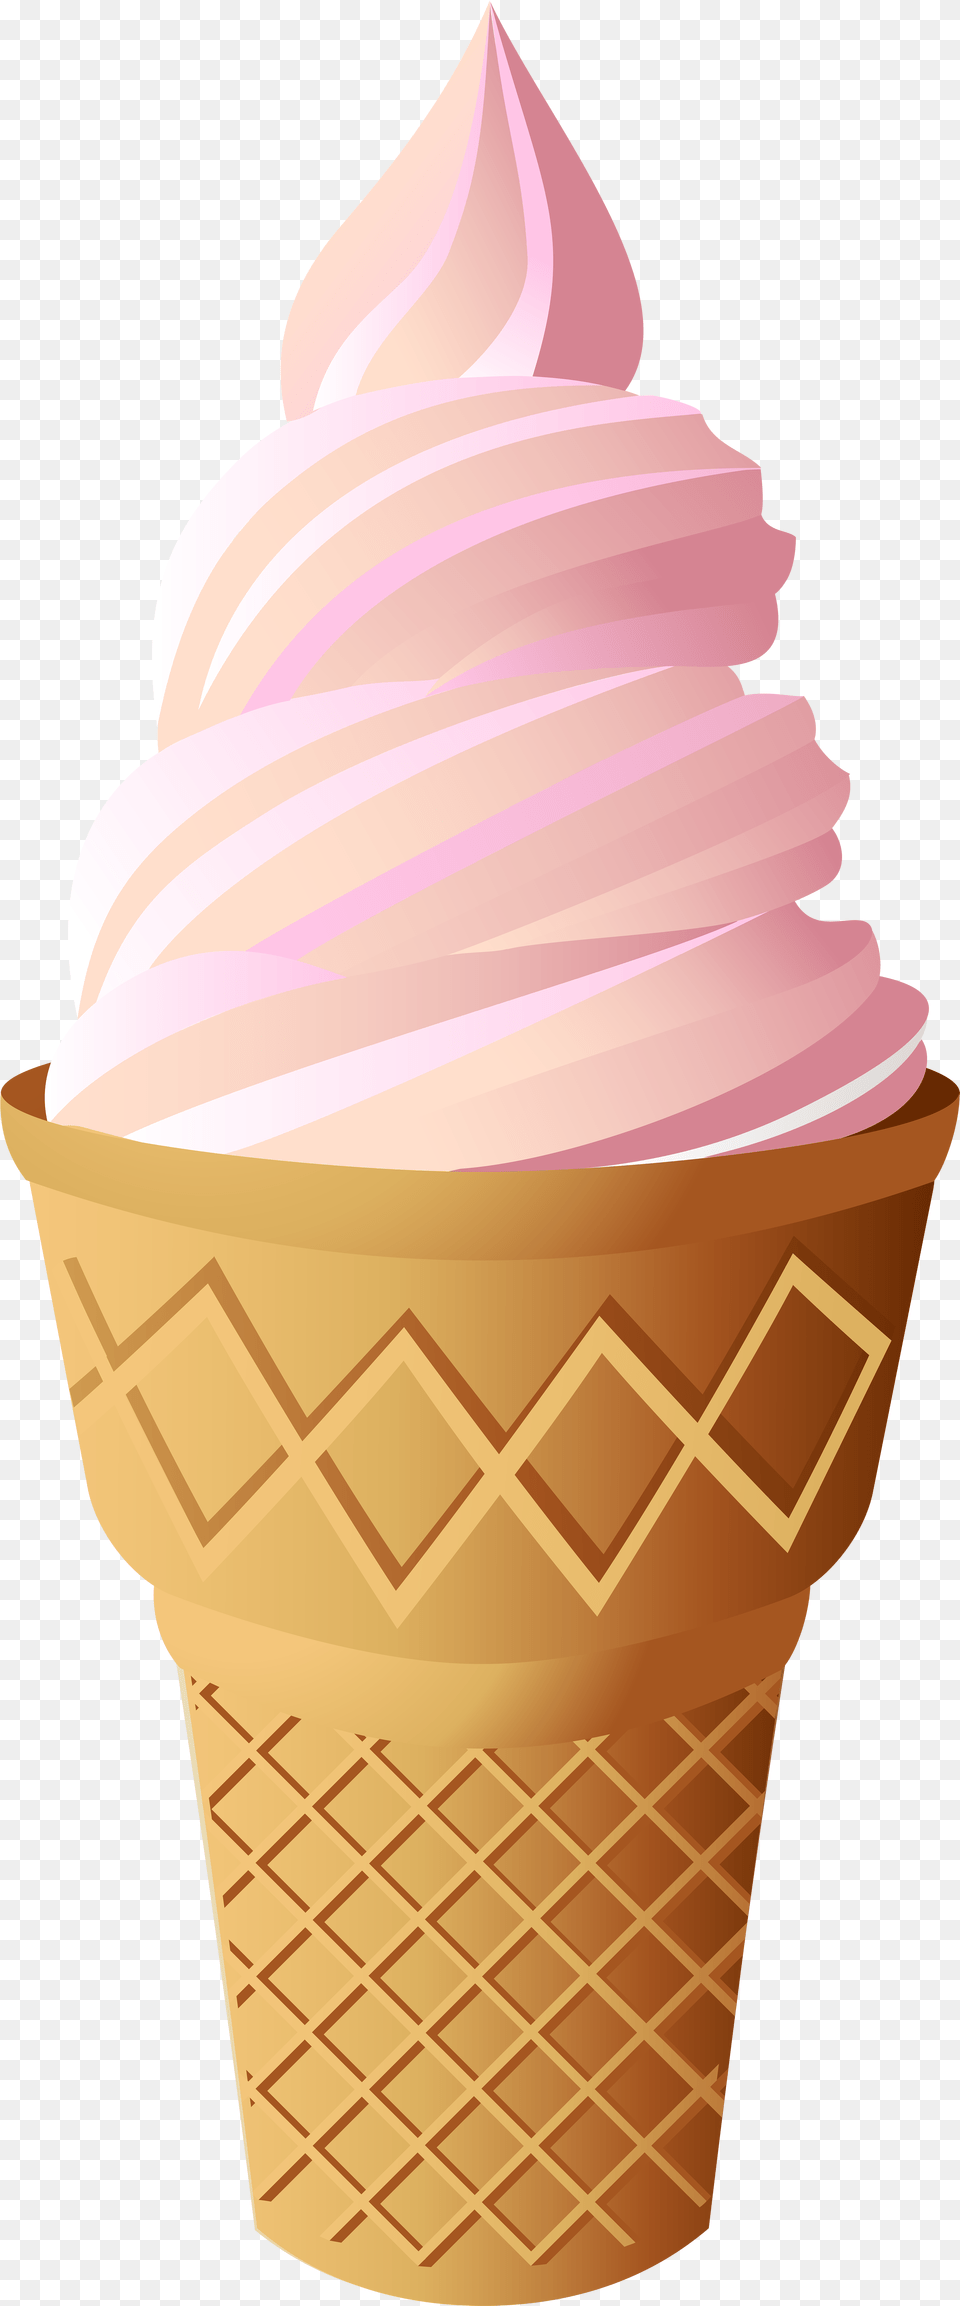 Pink Ice Cream Cone Clip Art Vanilla Ice Cream, Dessert, Food, Ice Cream, Soft Serve Ice Cream Png Image